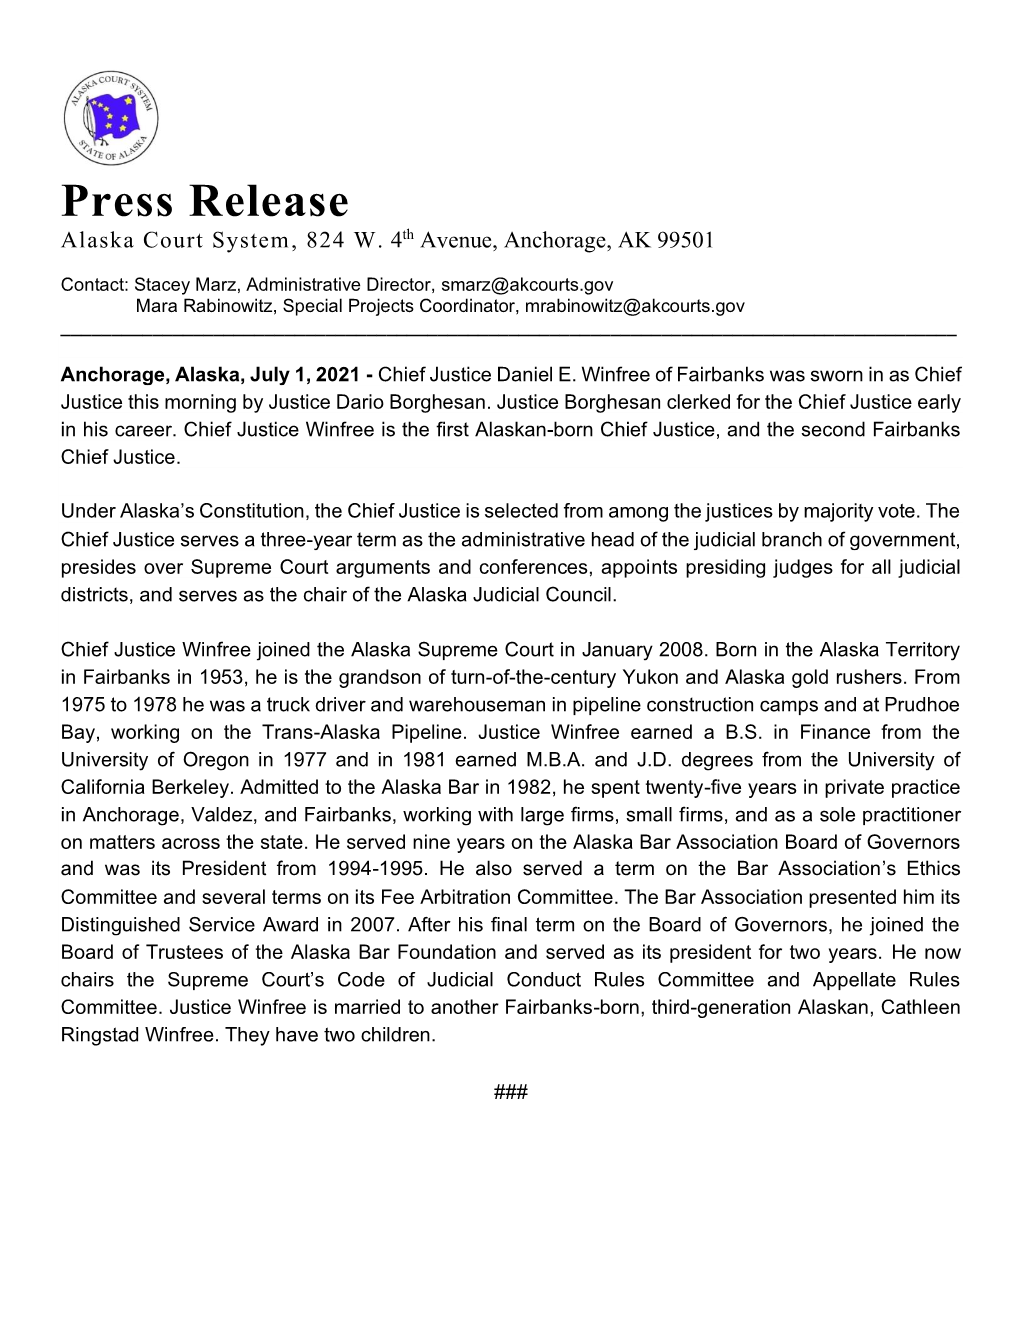 Press Release Alaska Court System, 824 W